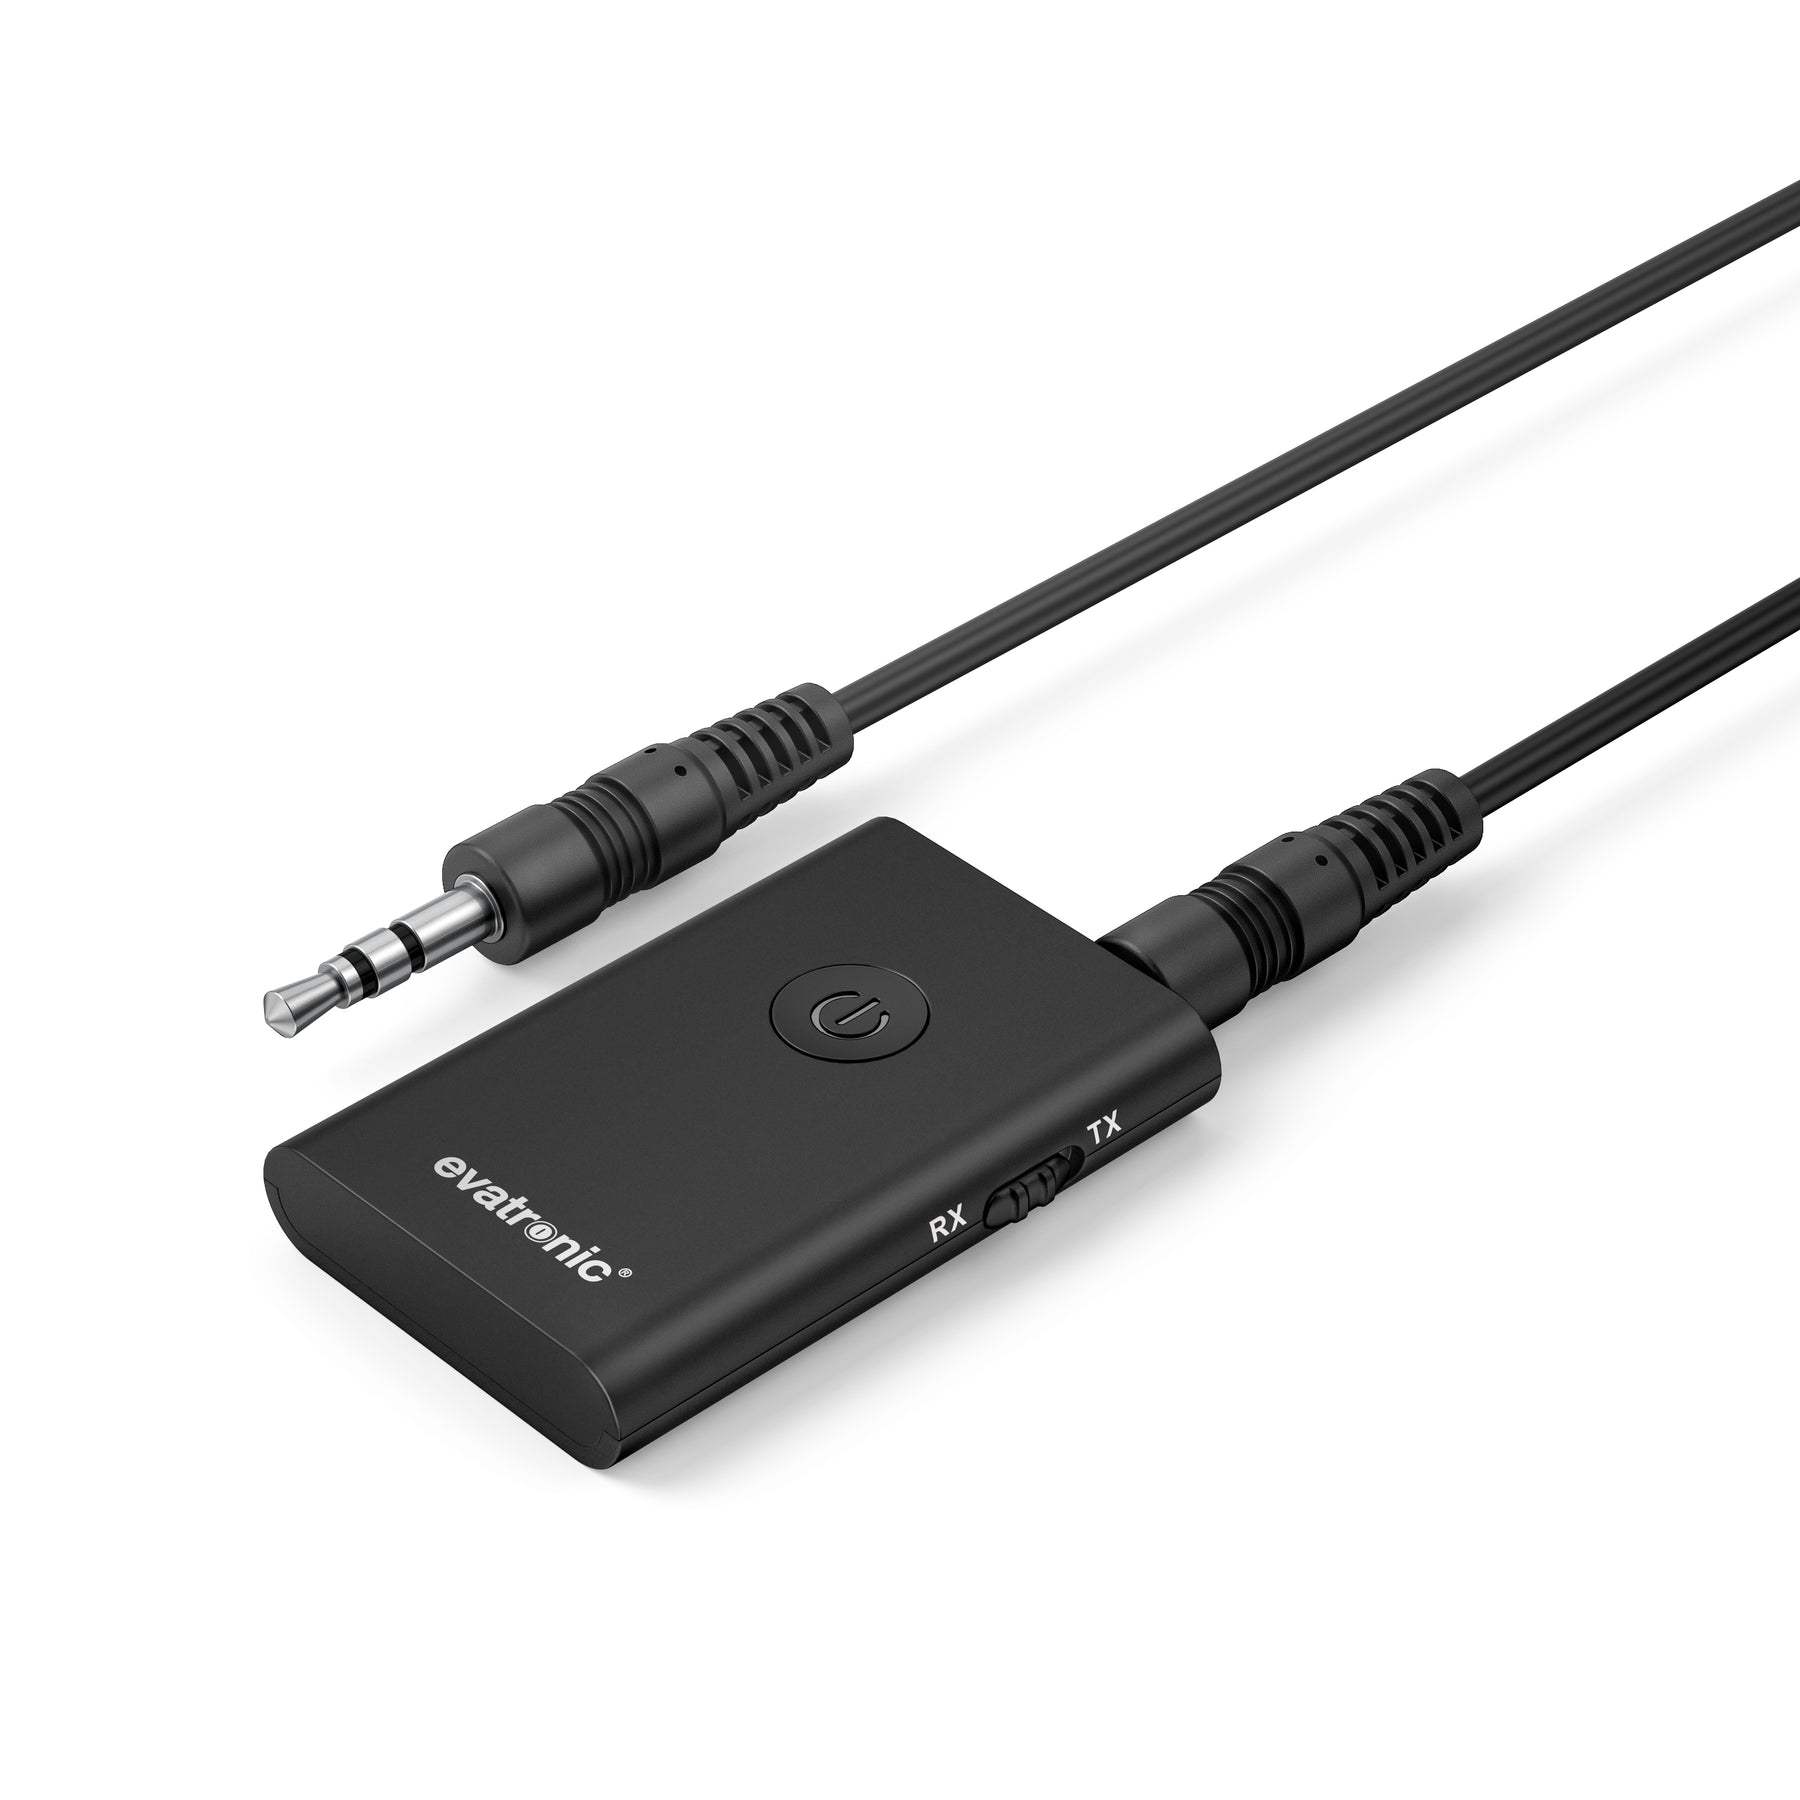 Bluetooth5.0 トランスミッター レシーバー 1台2役 送信機 受信機 充電式 無線 ワイヤレス 3.5mm